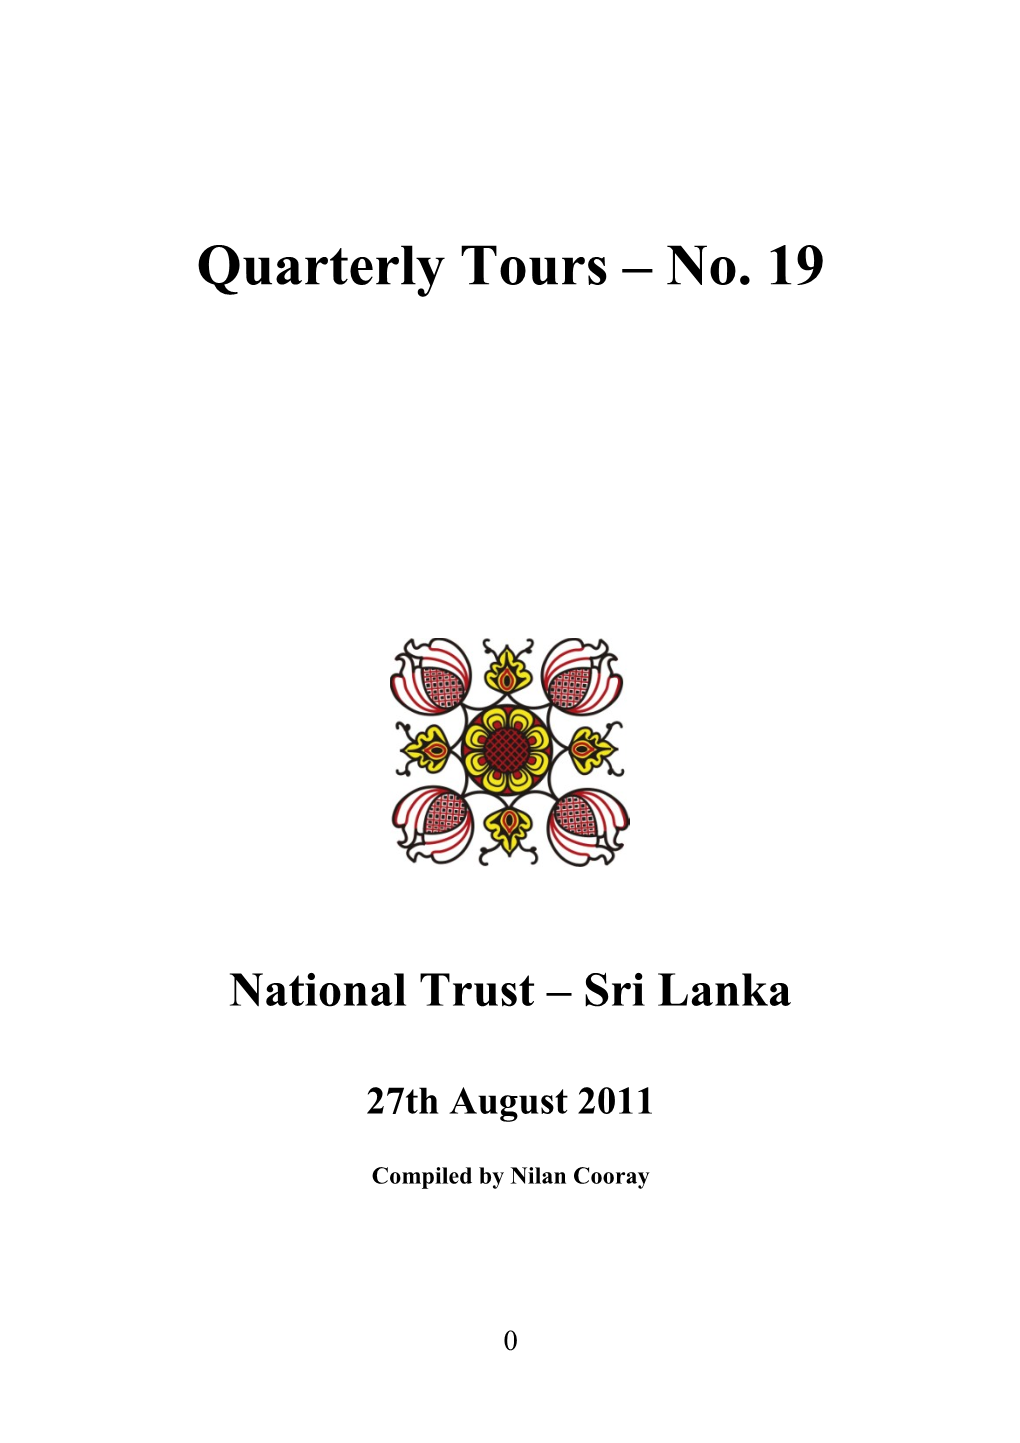 No. 19 National Trust